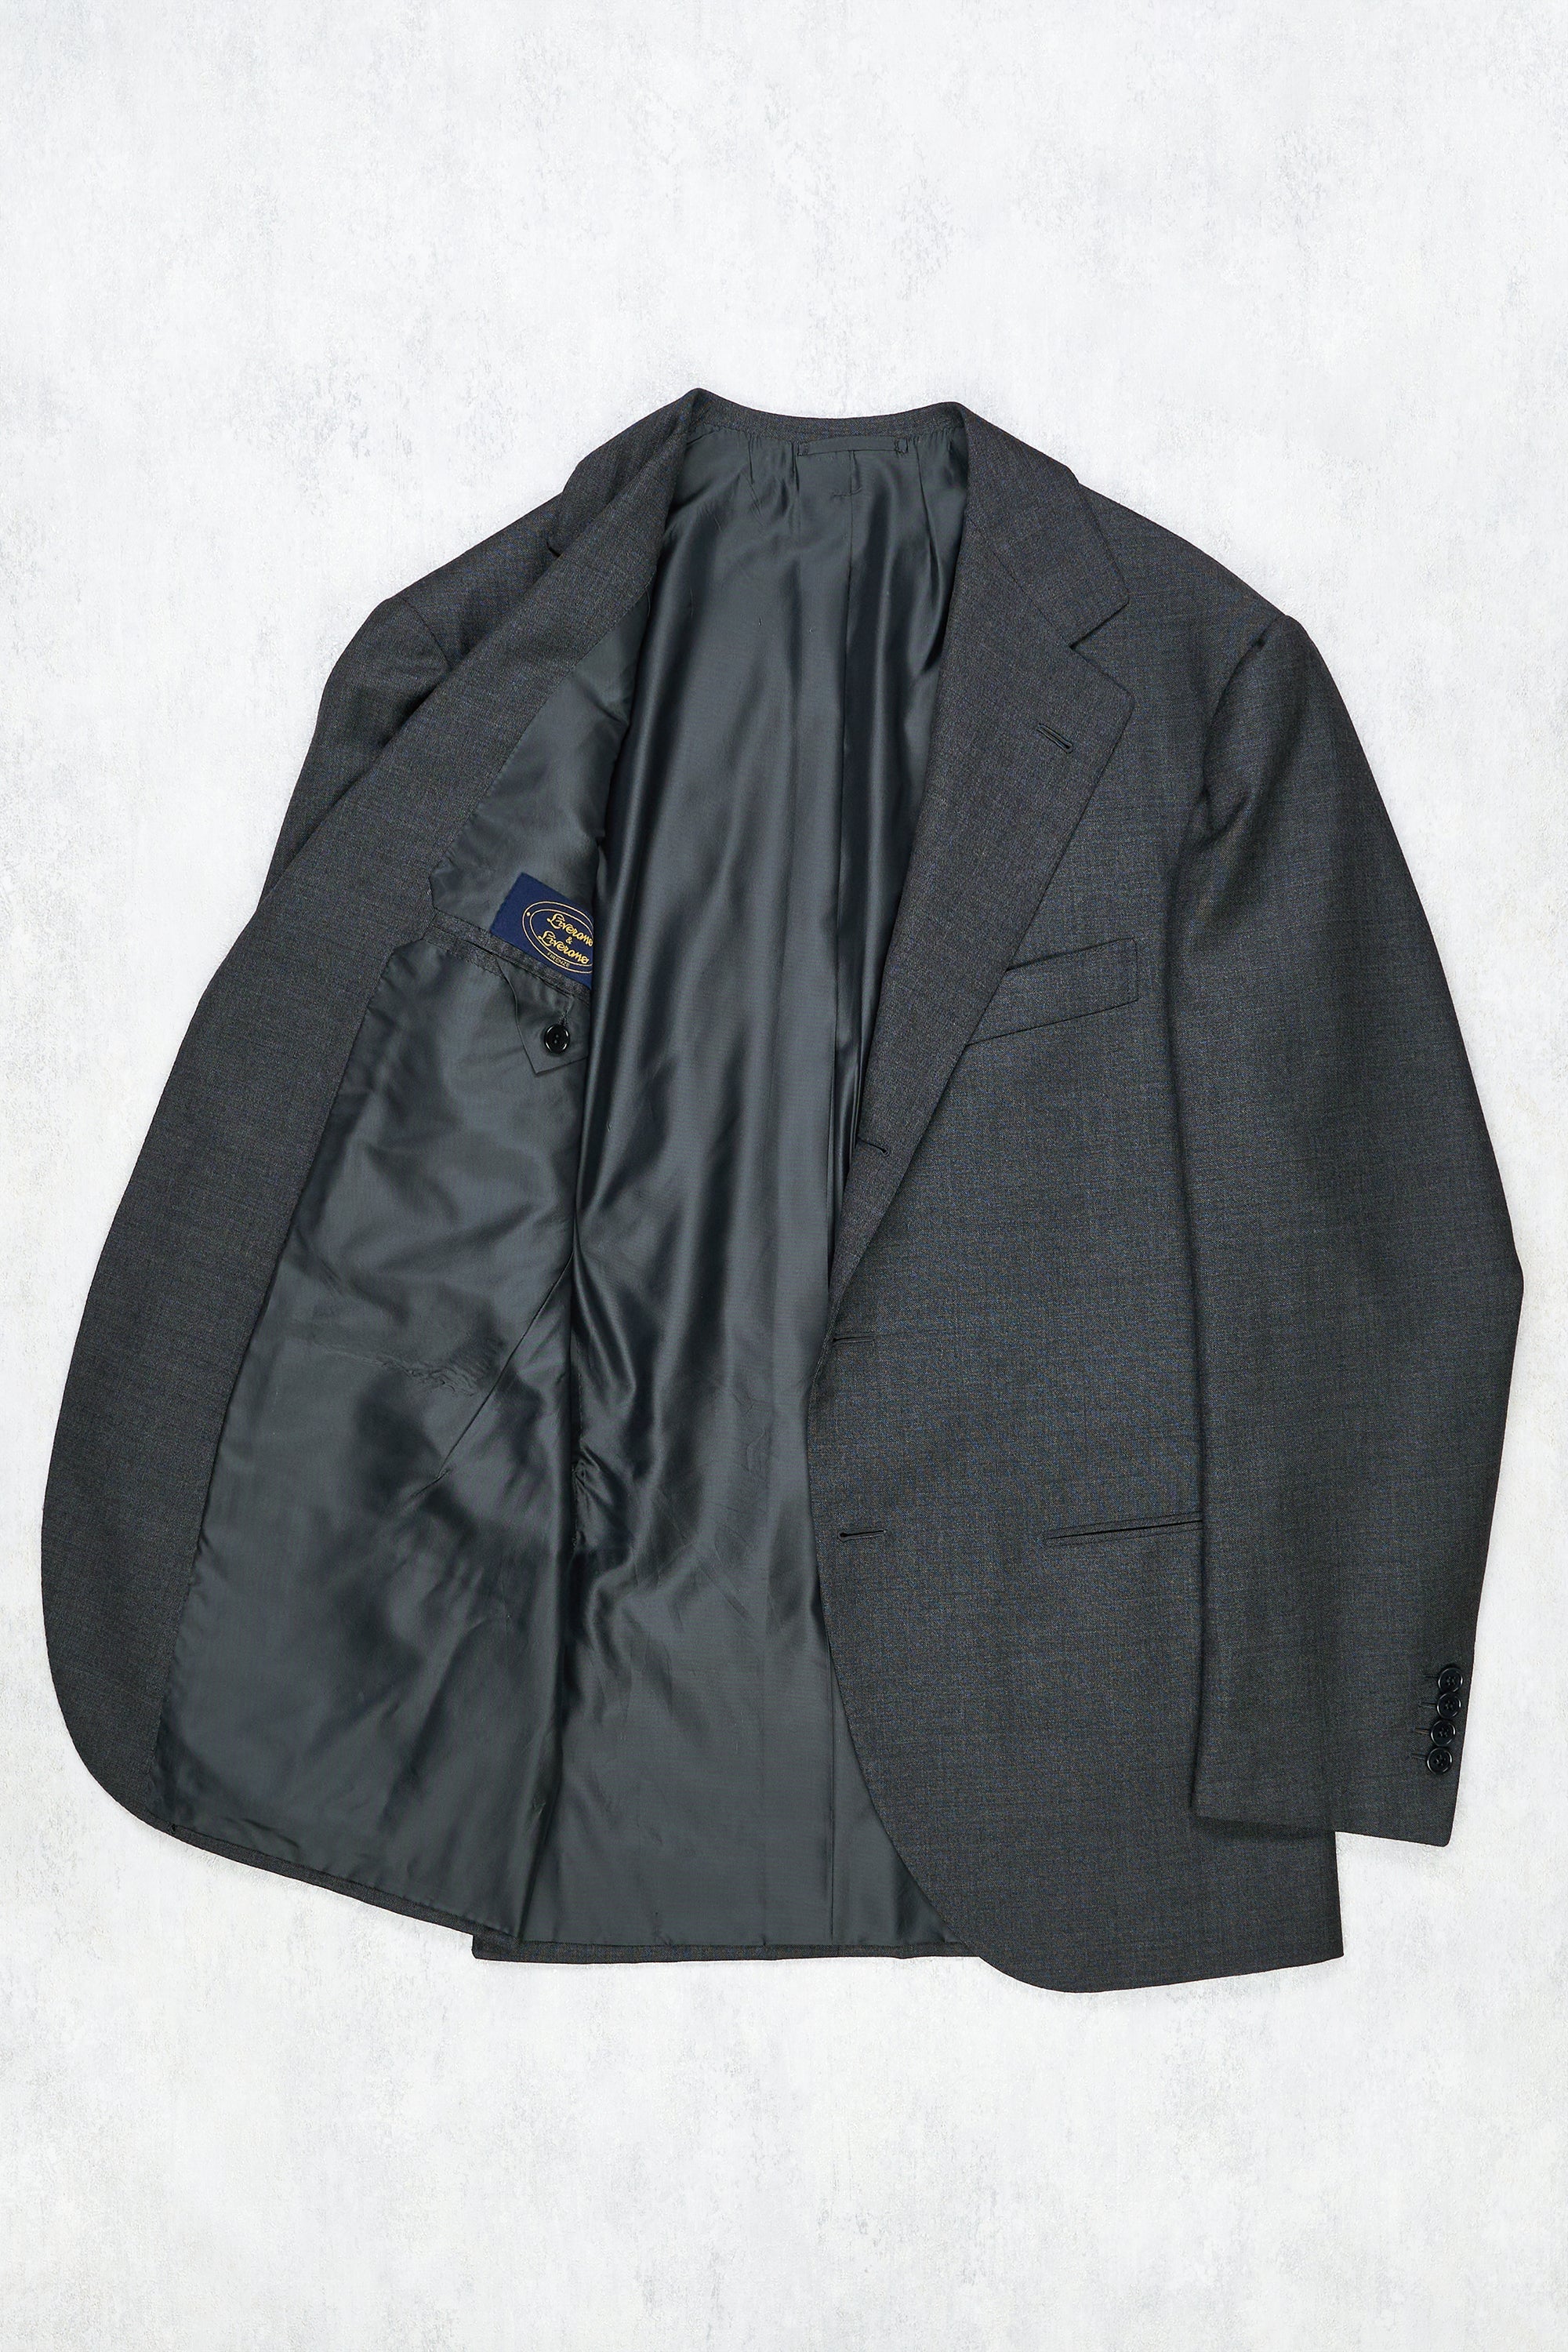 Liverano & Liverano Grey Wool Suit Bespoke